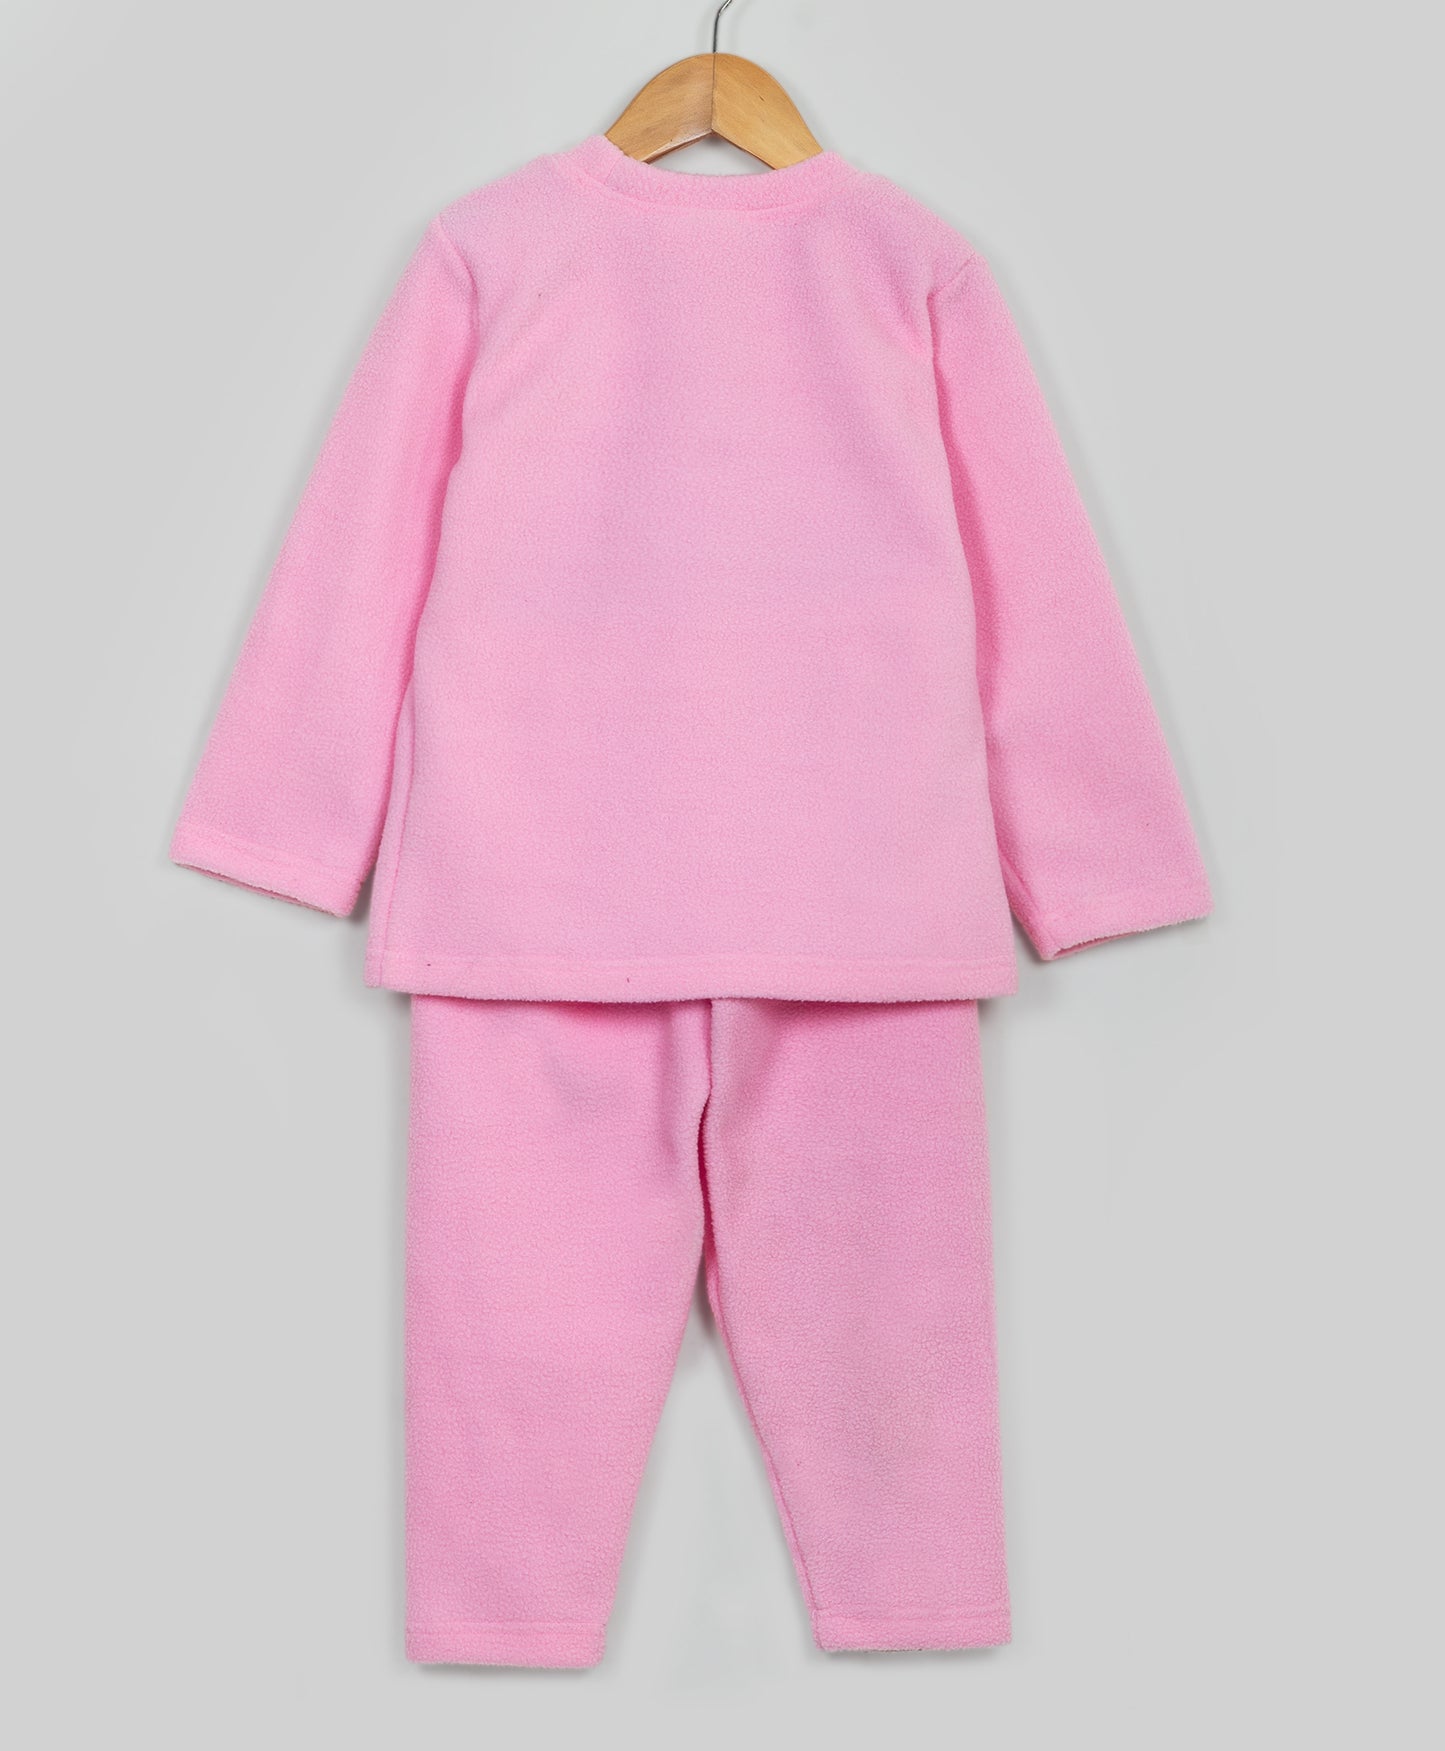 Soft pink unicorn patchwork fleece set